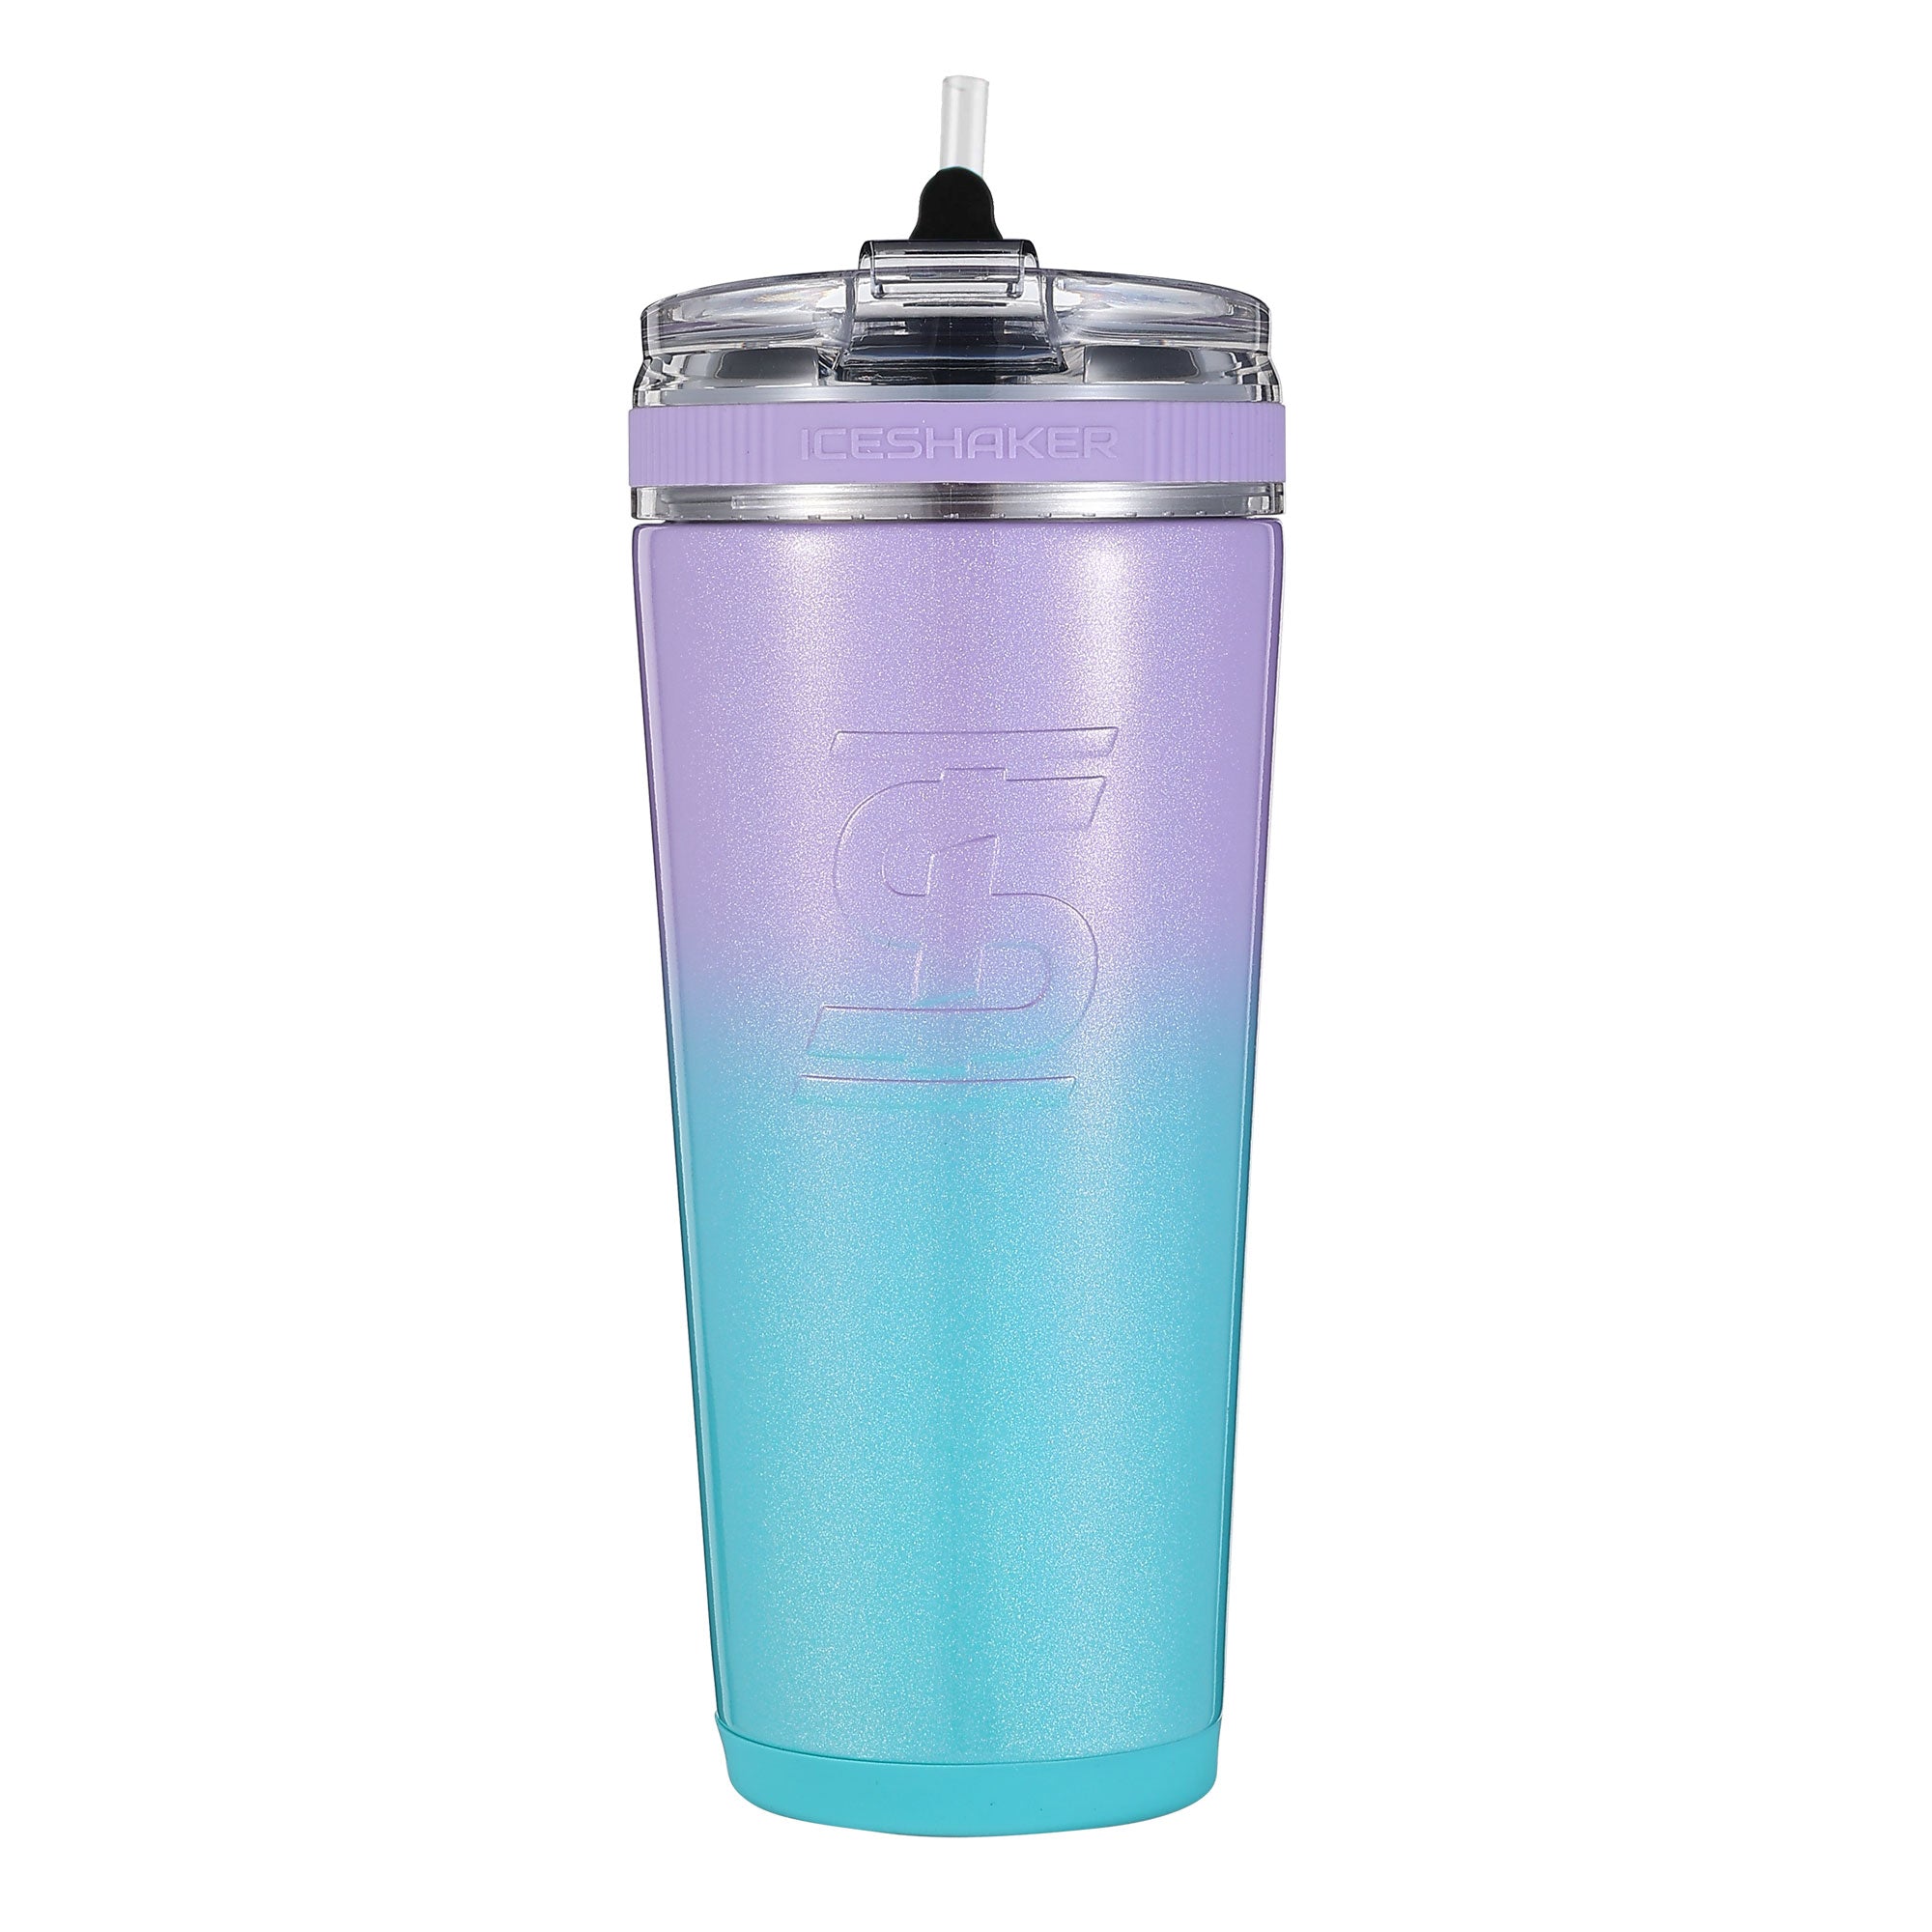 Finaflex Purple Shaker Cup